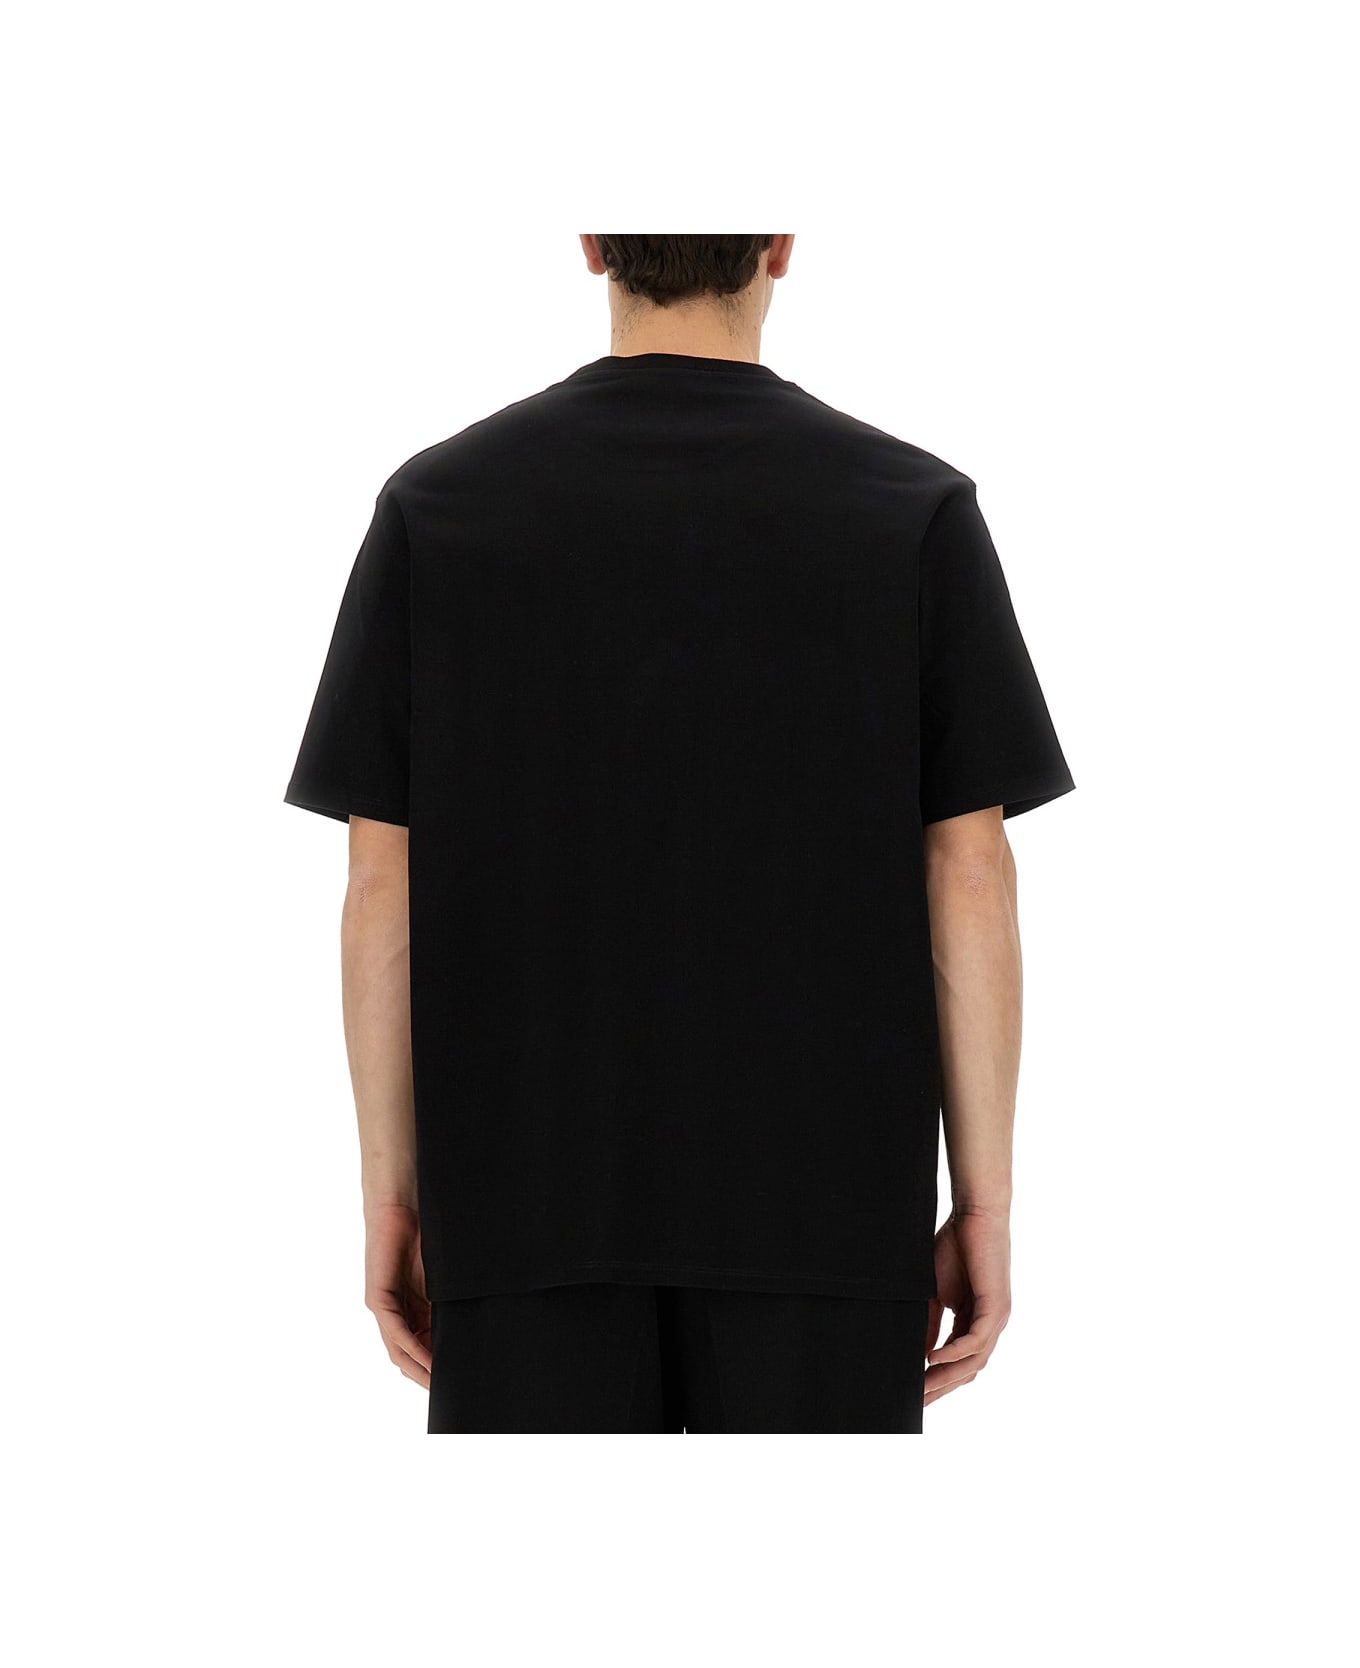 Lanvin T-shirt With Logo - BLACK シャツ